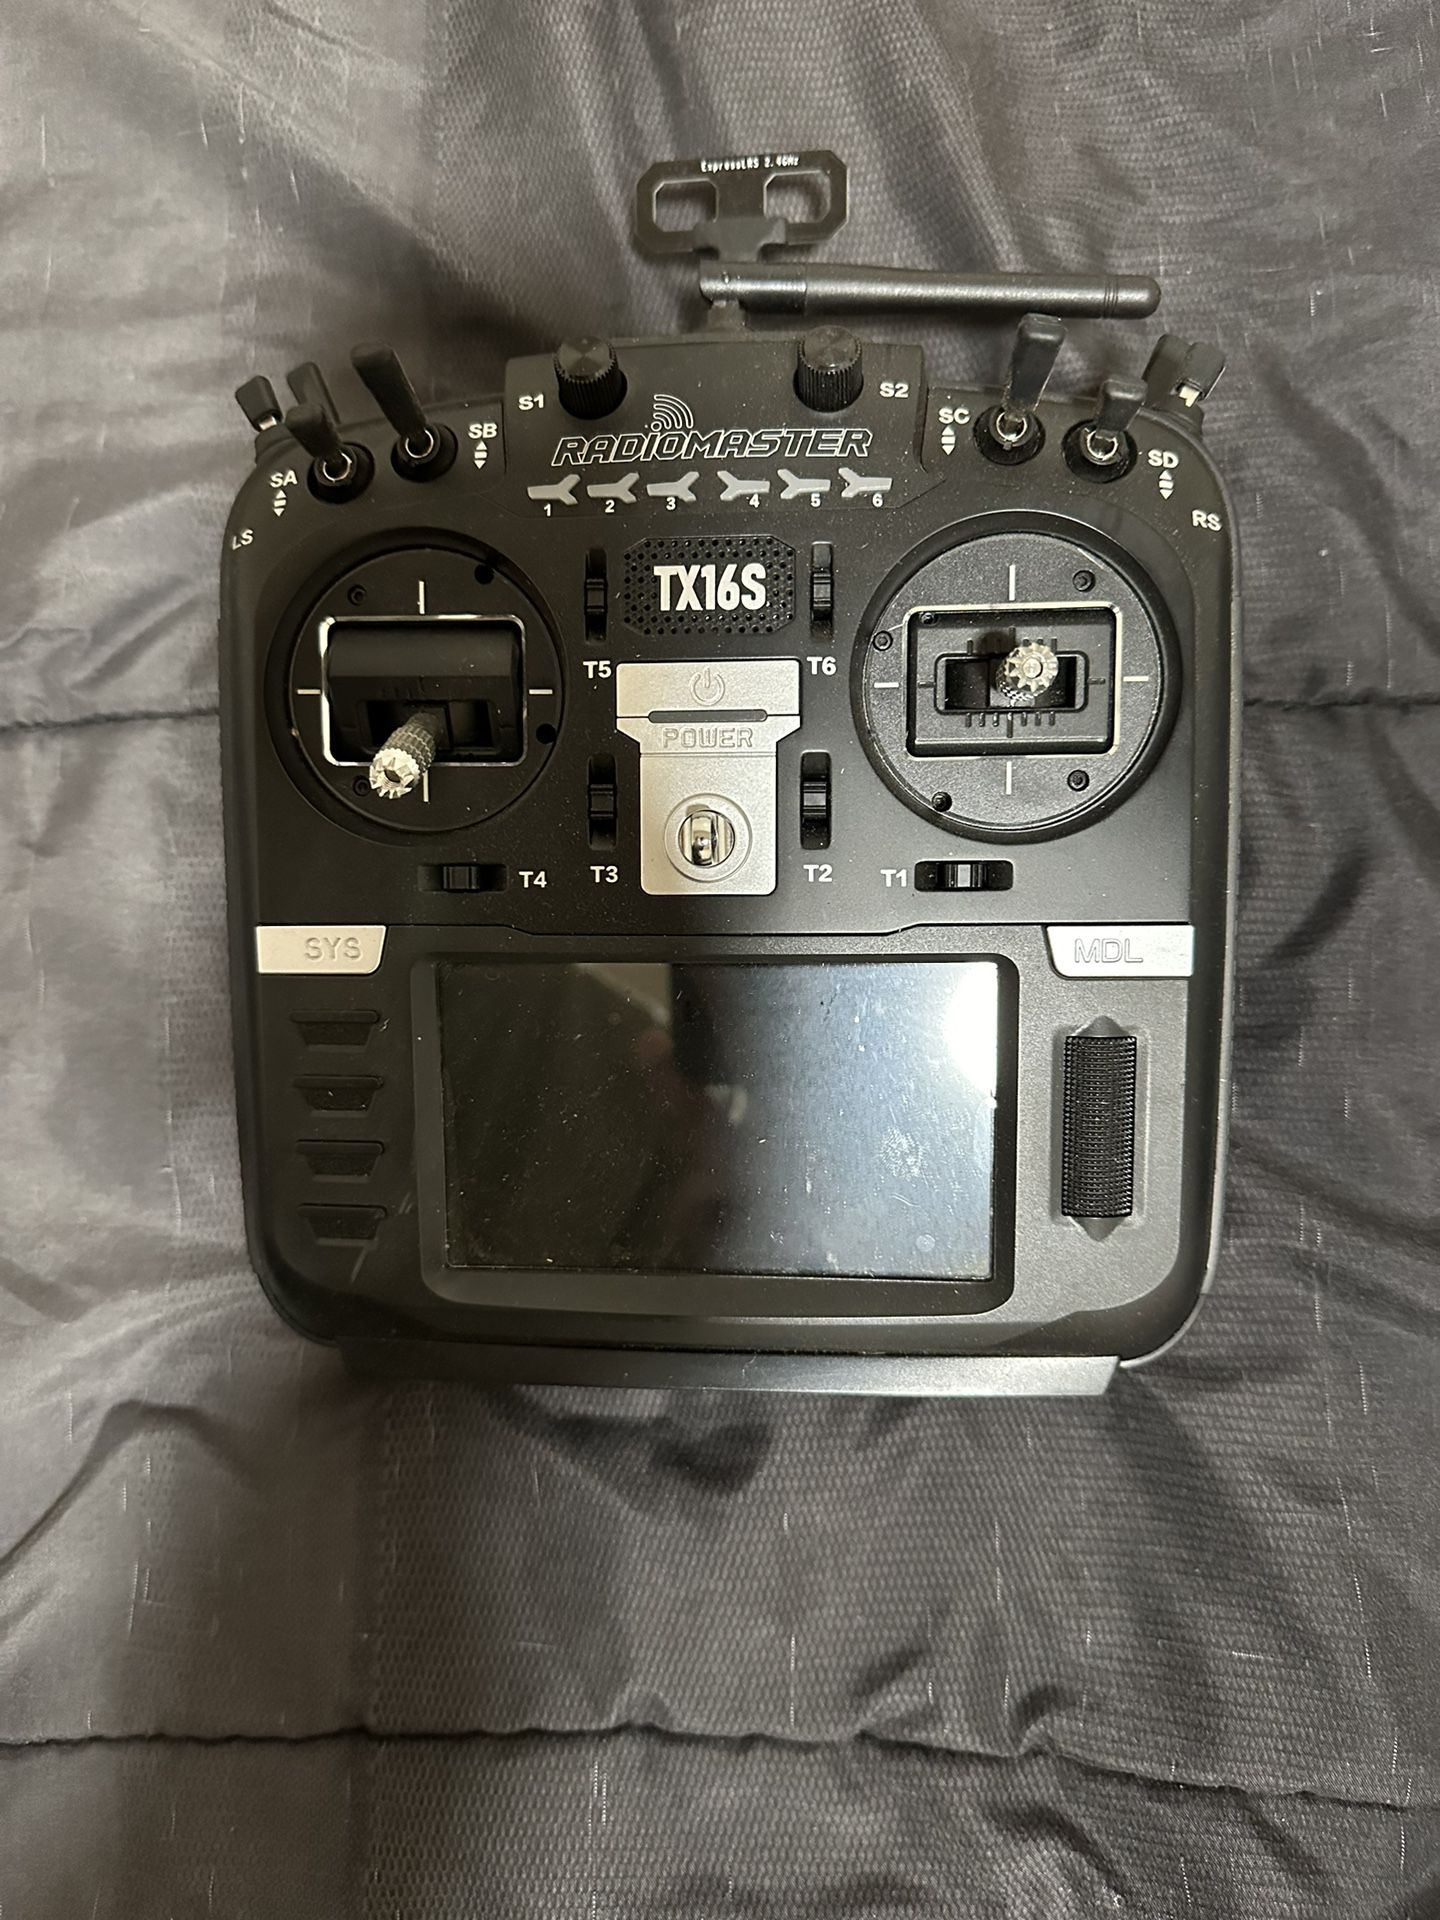 Tx16s Radio Controller And Ethix Radio Controller